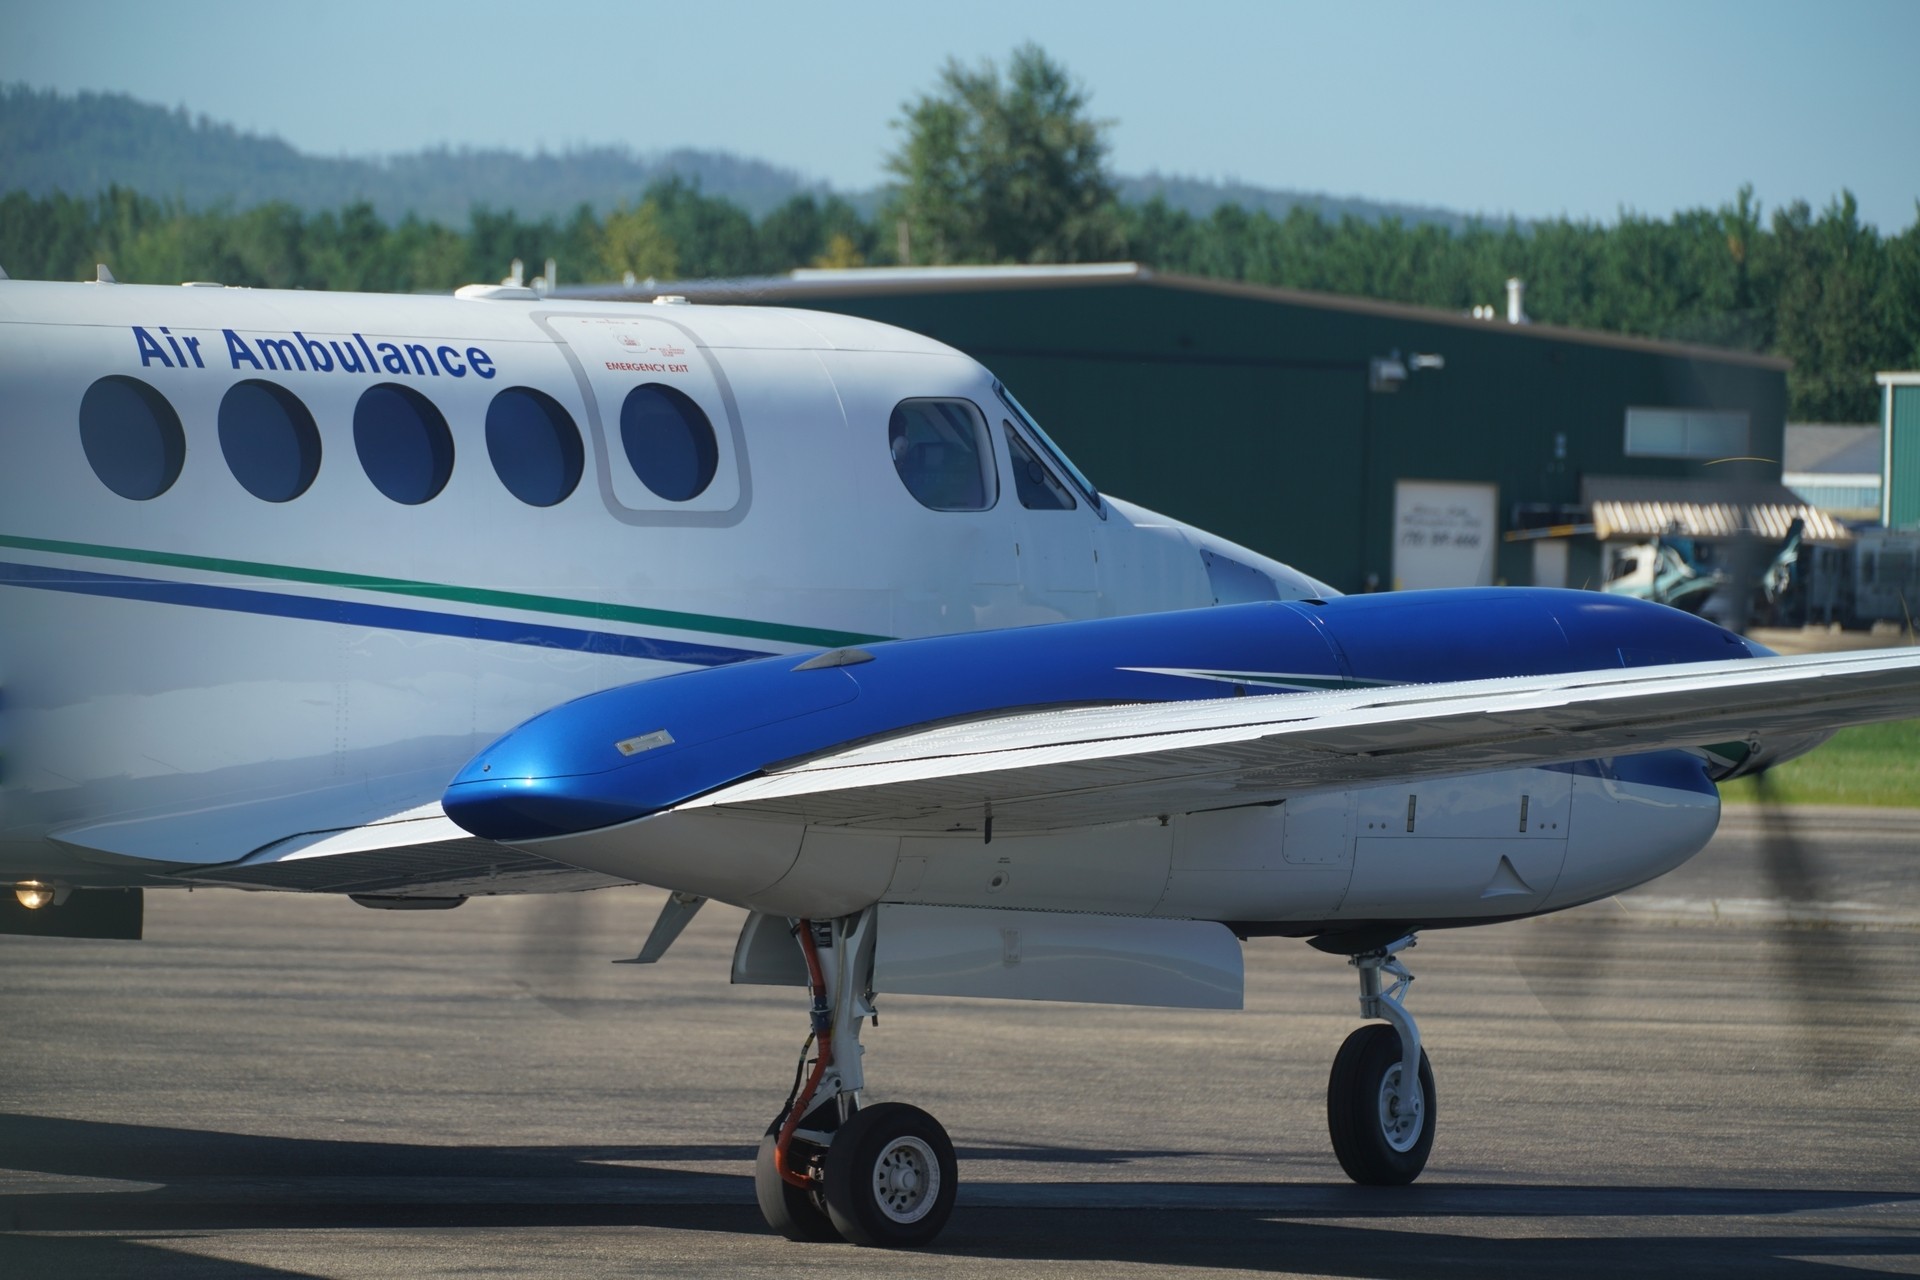 Medevac Air Ambulance Private Jet Charter Service